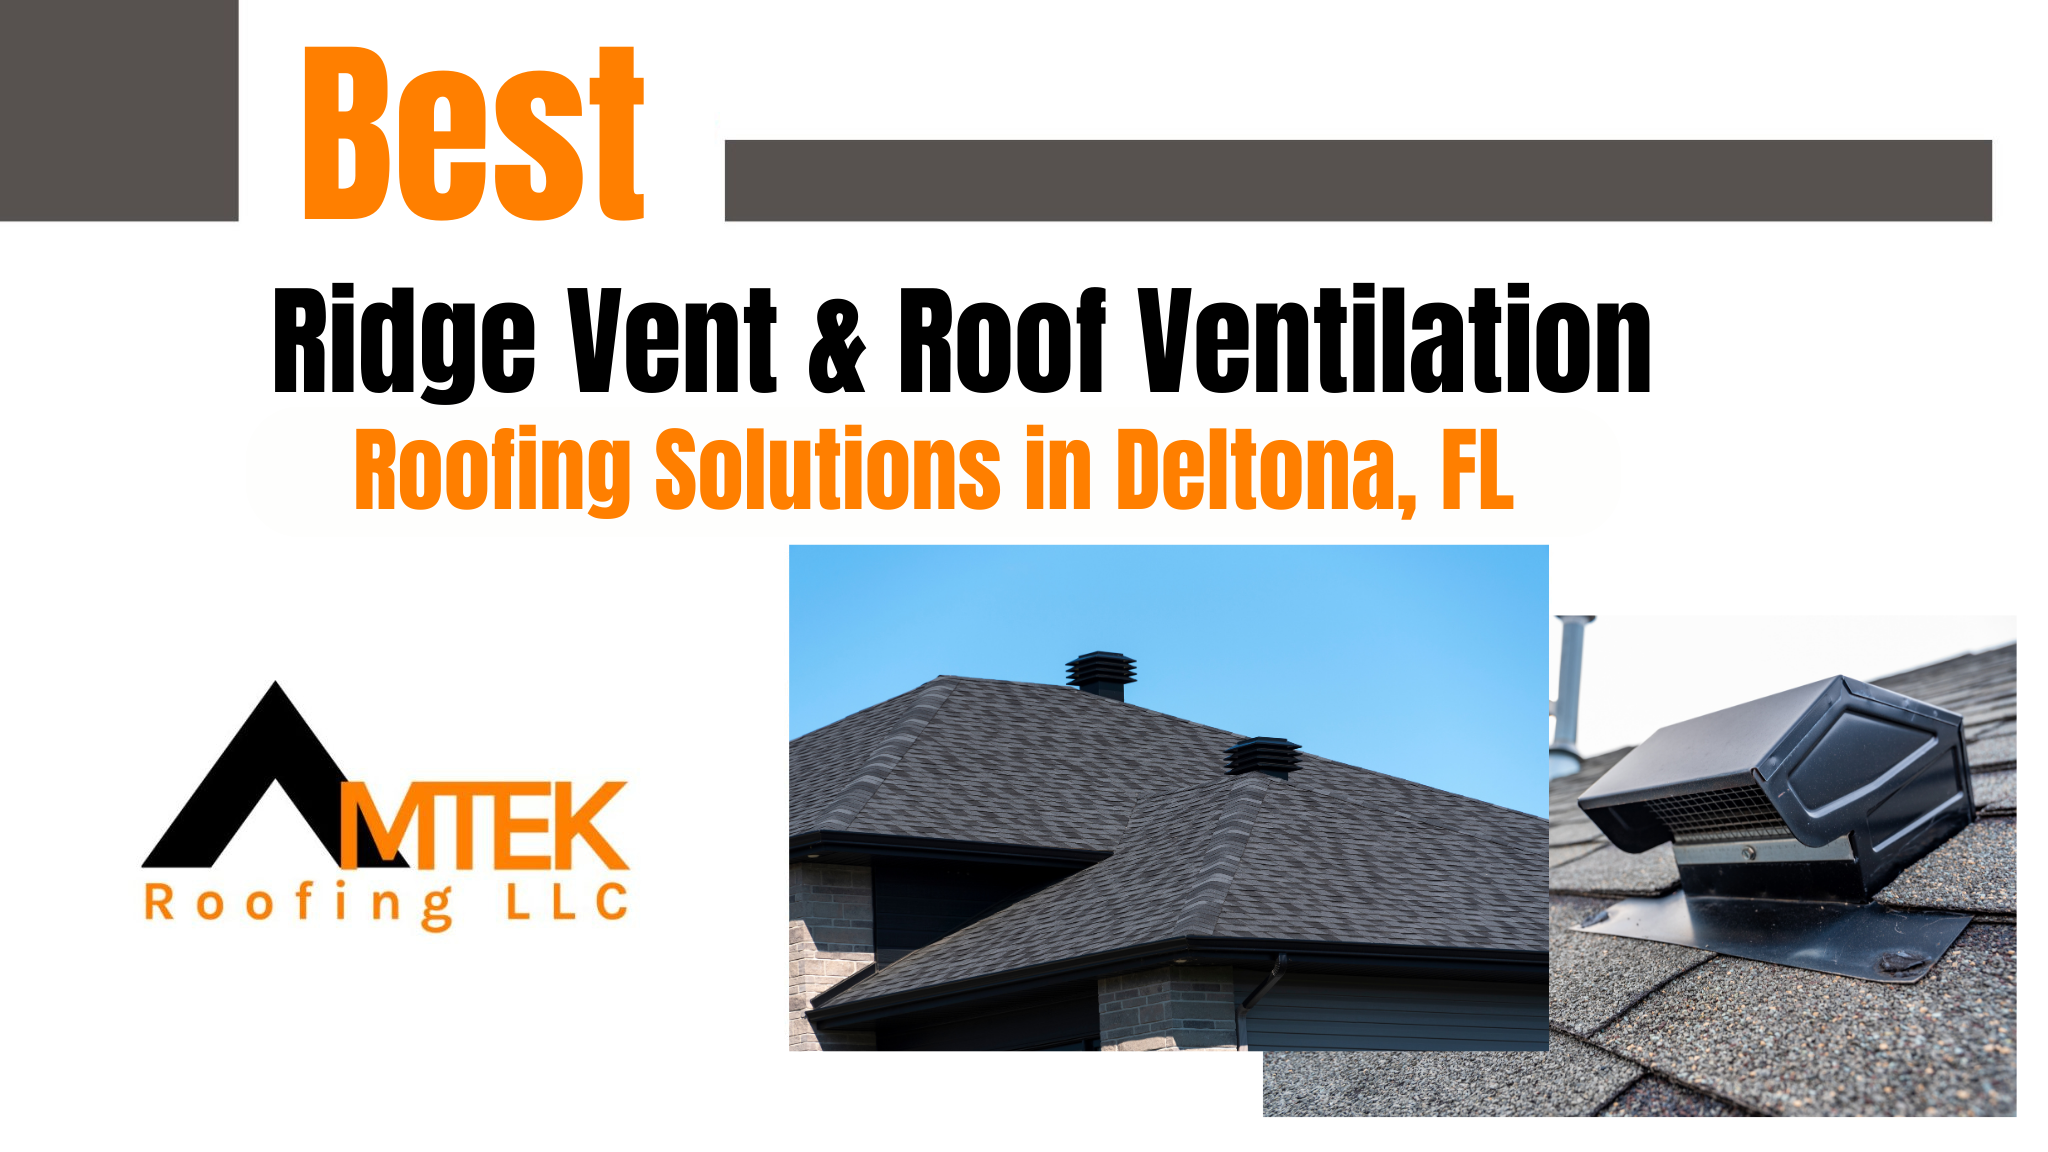 Best Ridge Vents and Roof Ventilation in Deltona